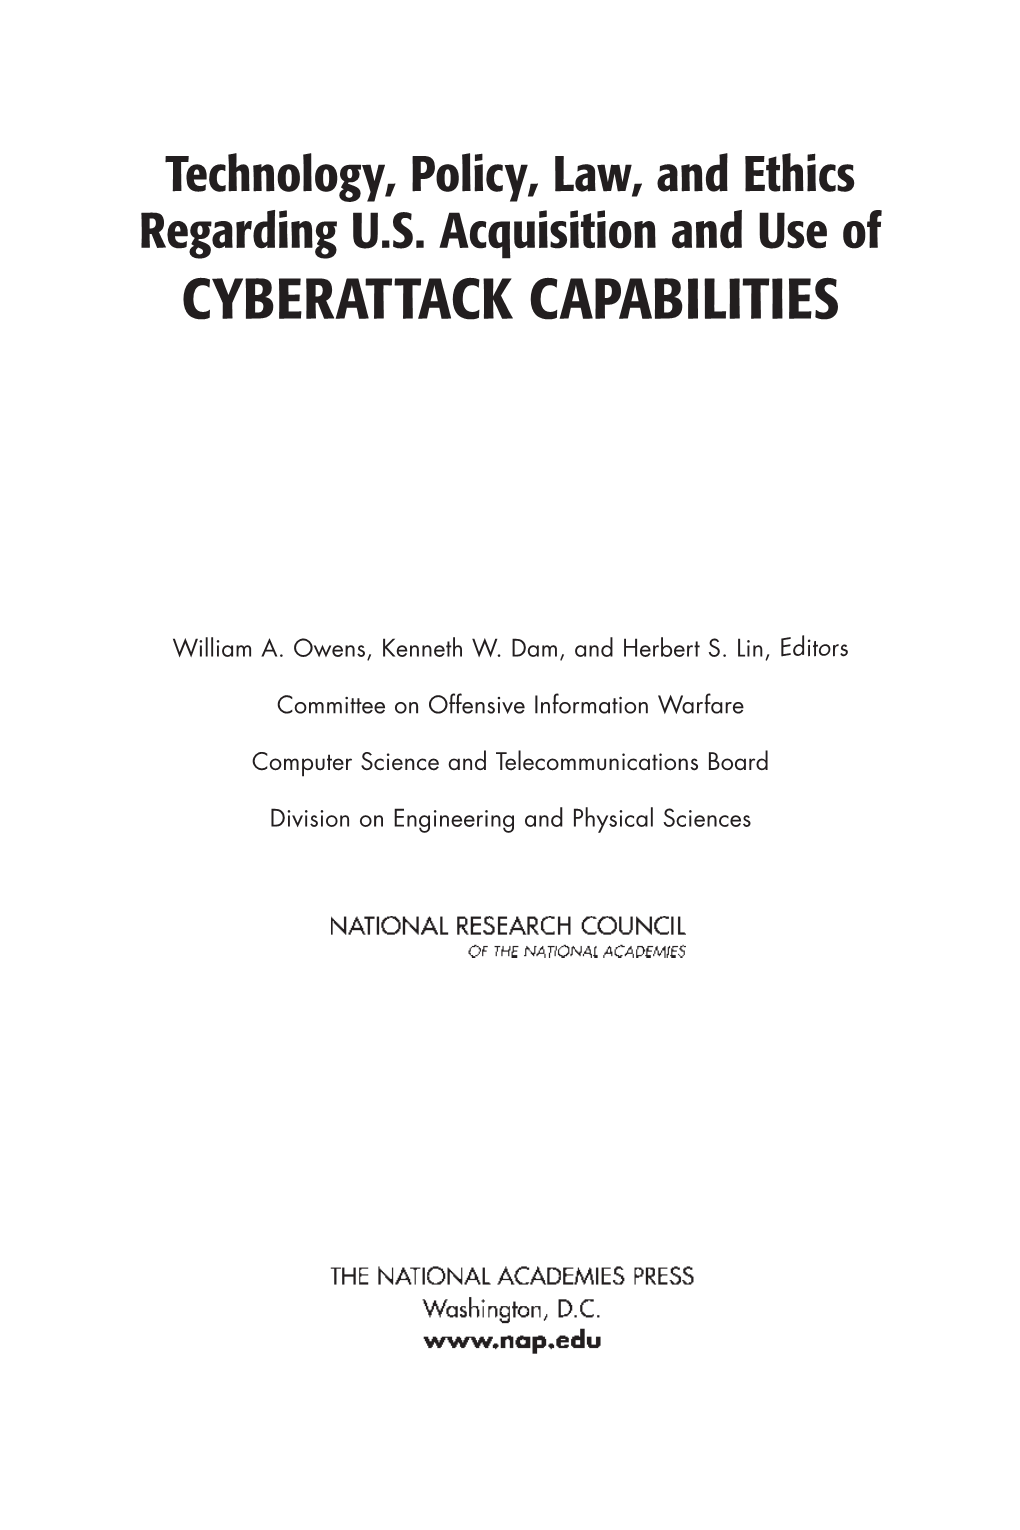 Cyberattack Capabilities